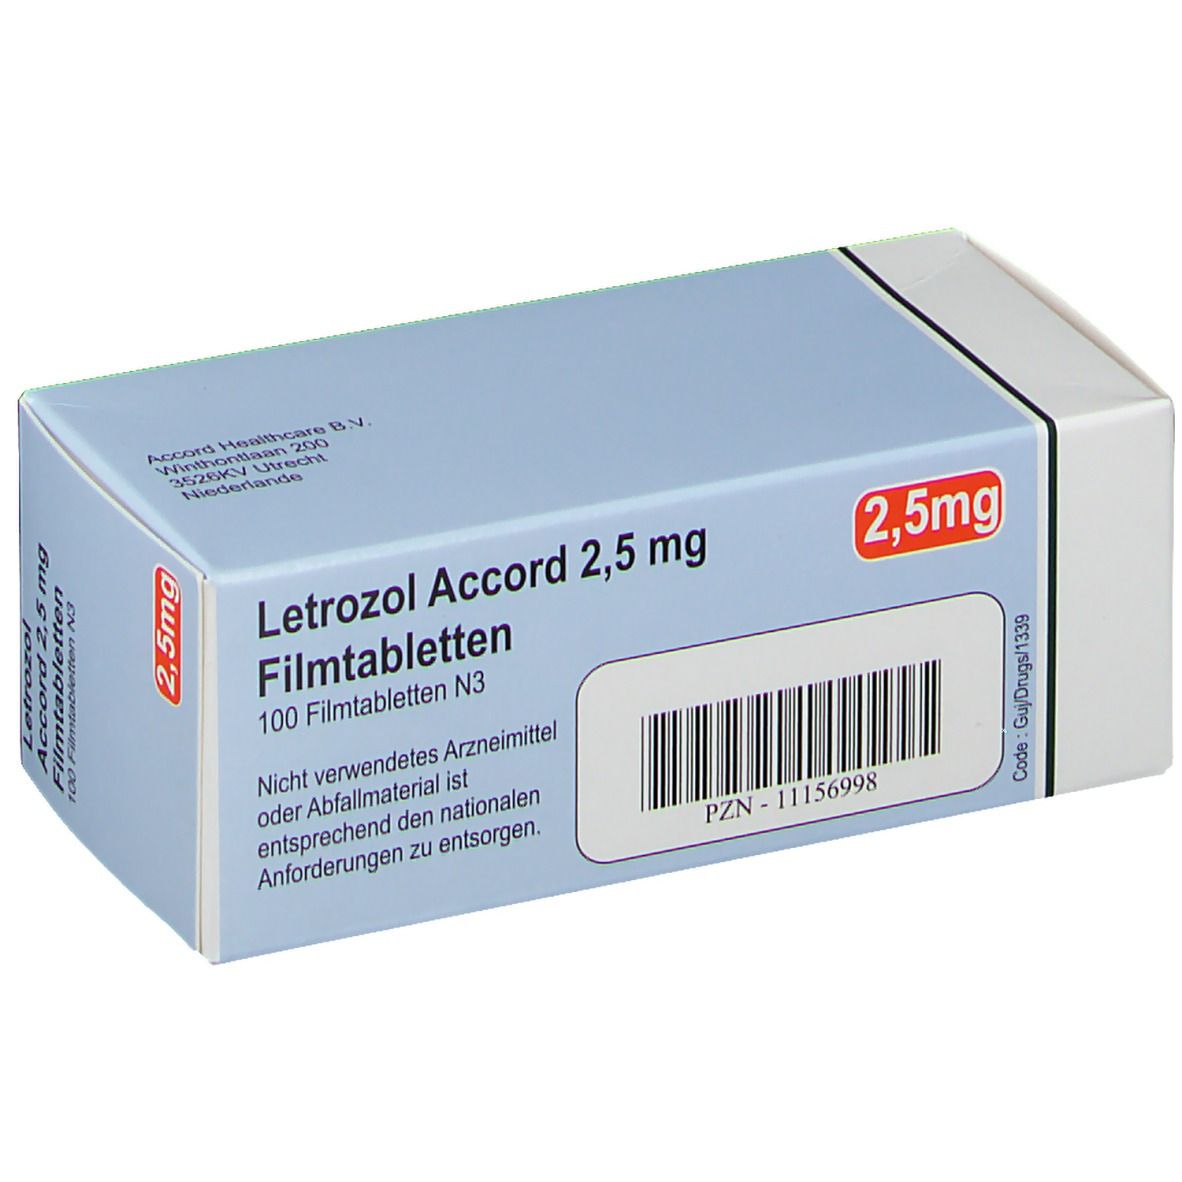 Letrozol Accord 2,5 mg